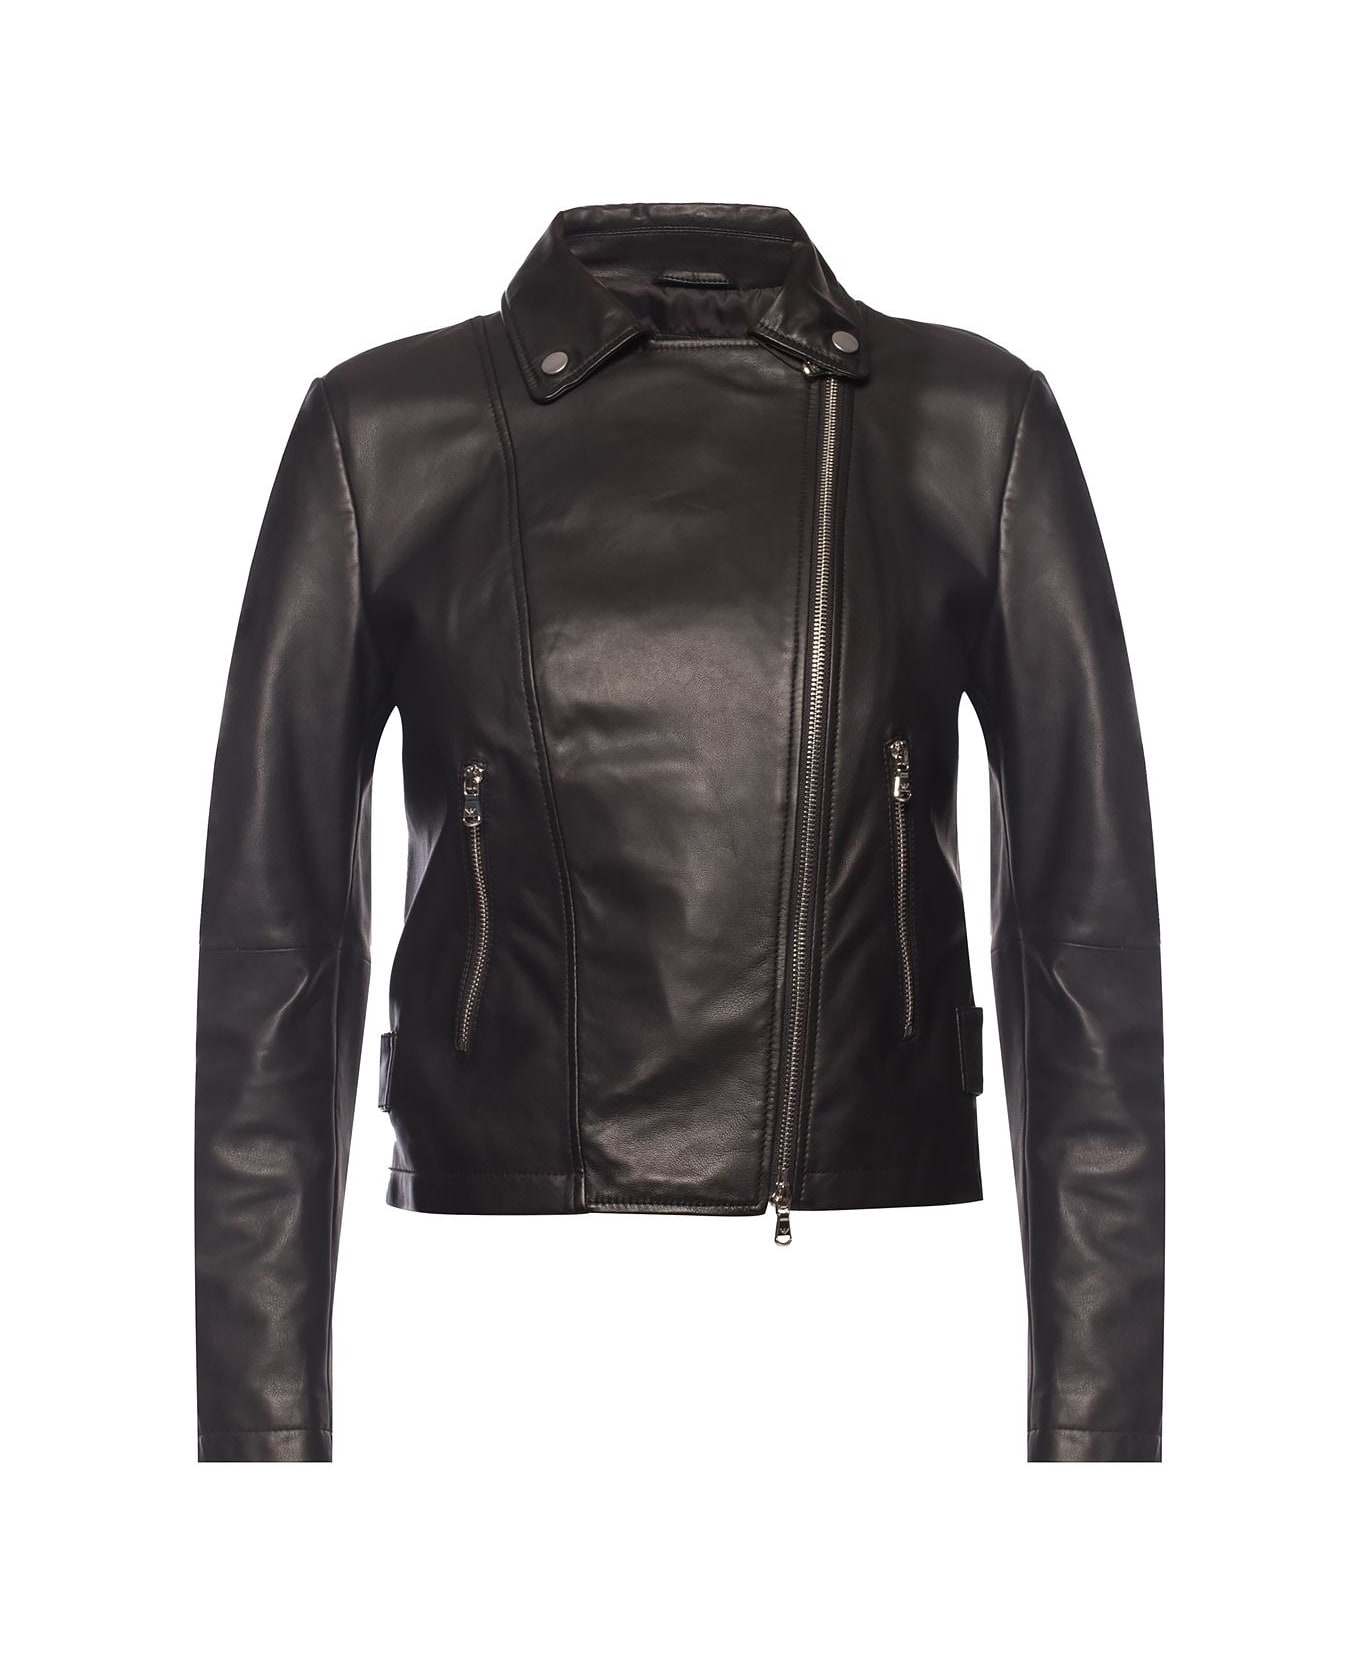 Giorgio Armani Leather Jacket - Nero レザージャケット